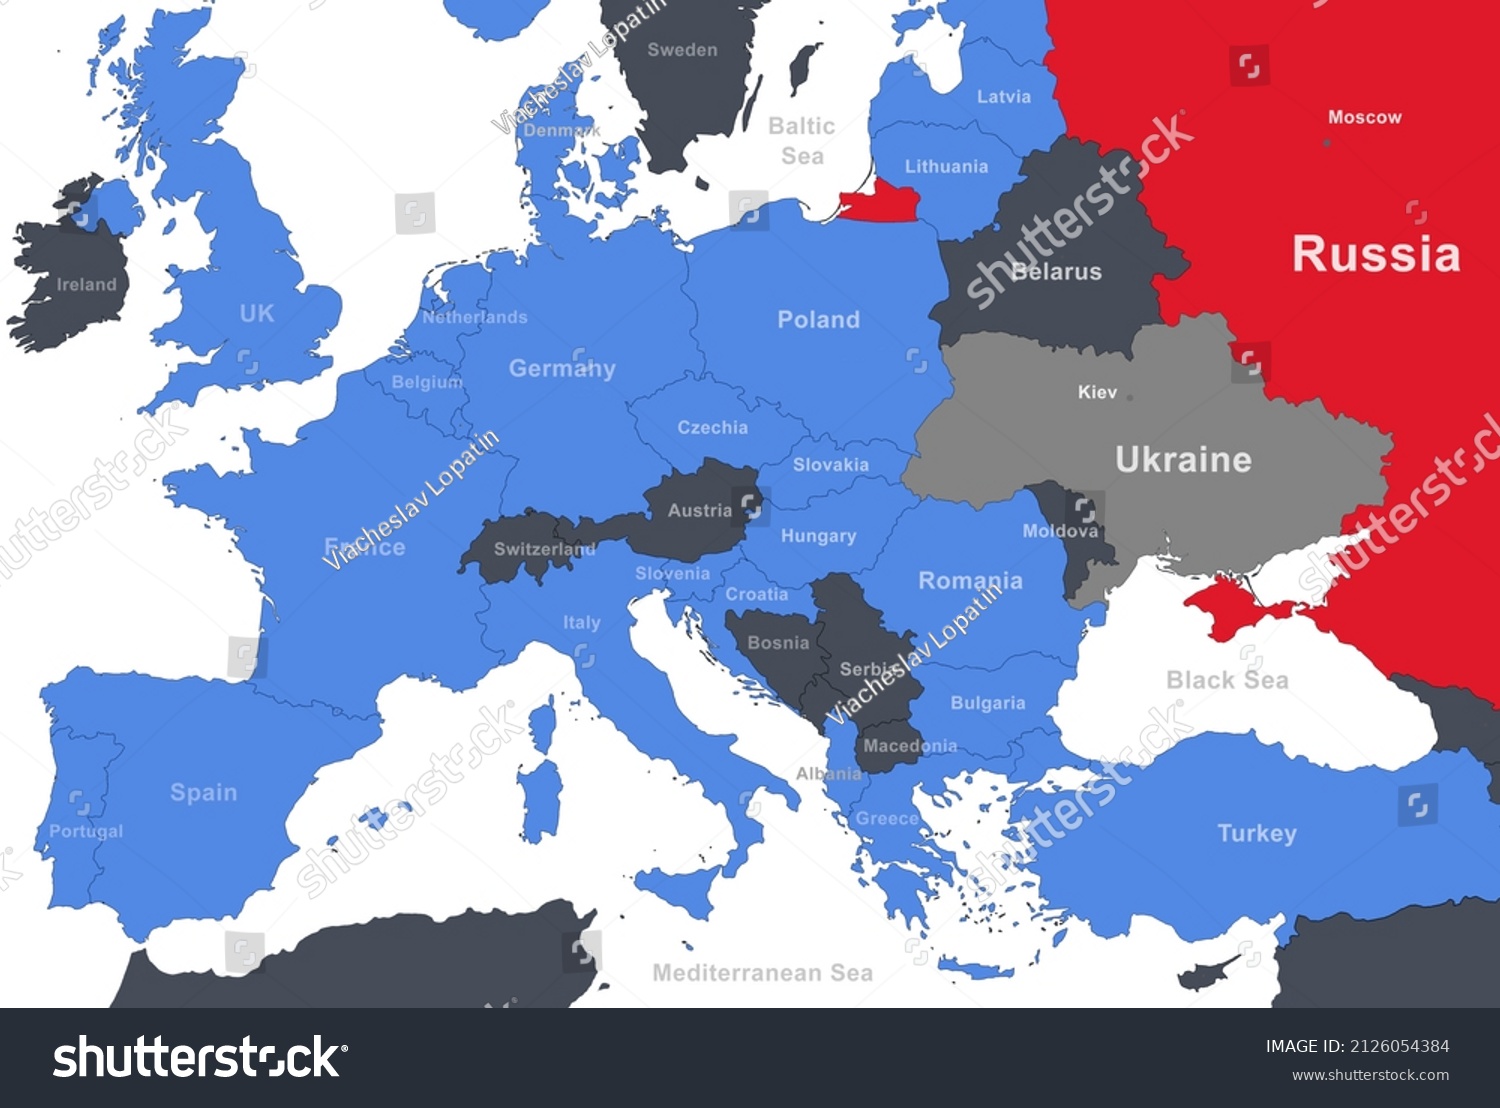 stock-photo-russia-north-atlantic-alliance-nato-and-ukraine-on-europe-outline-map-russian-border-on-2126054384.jpg